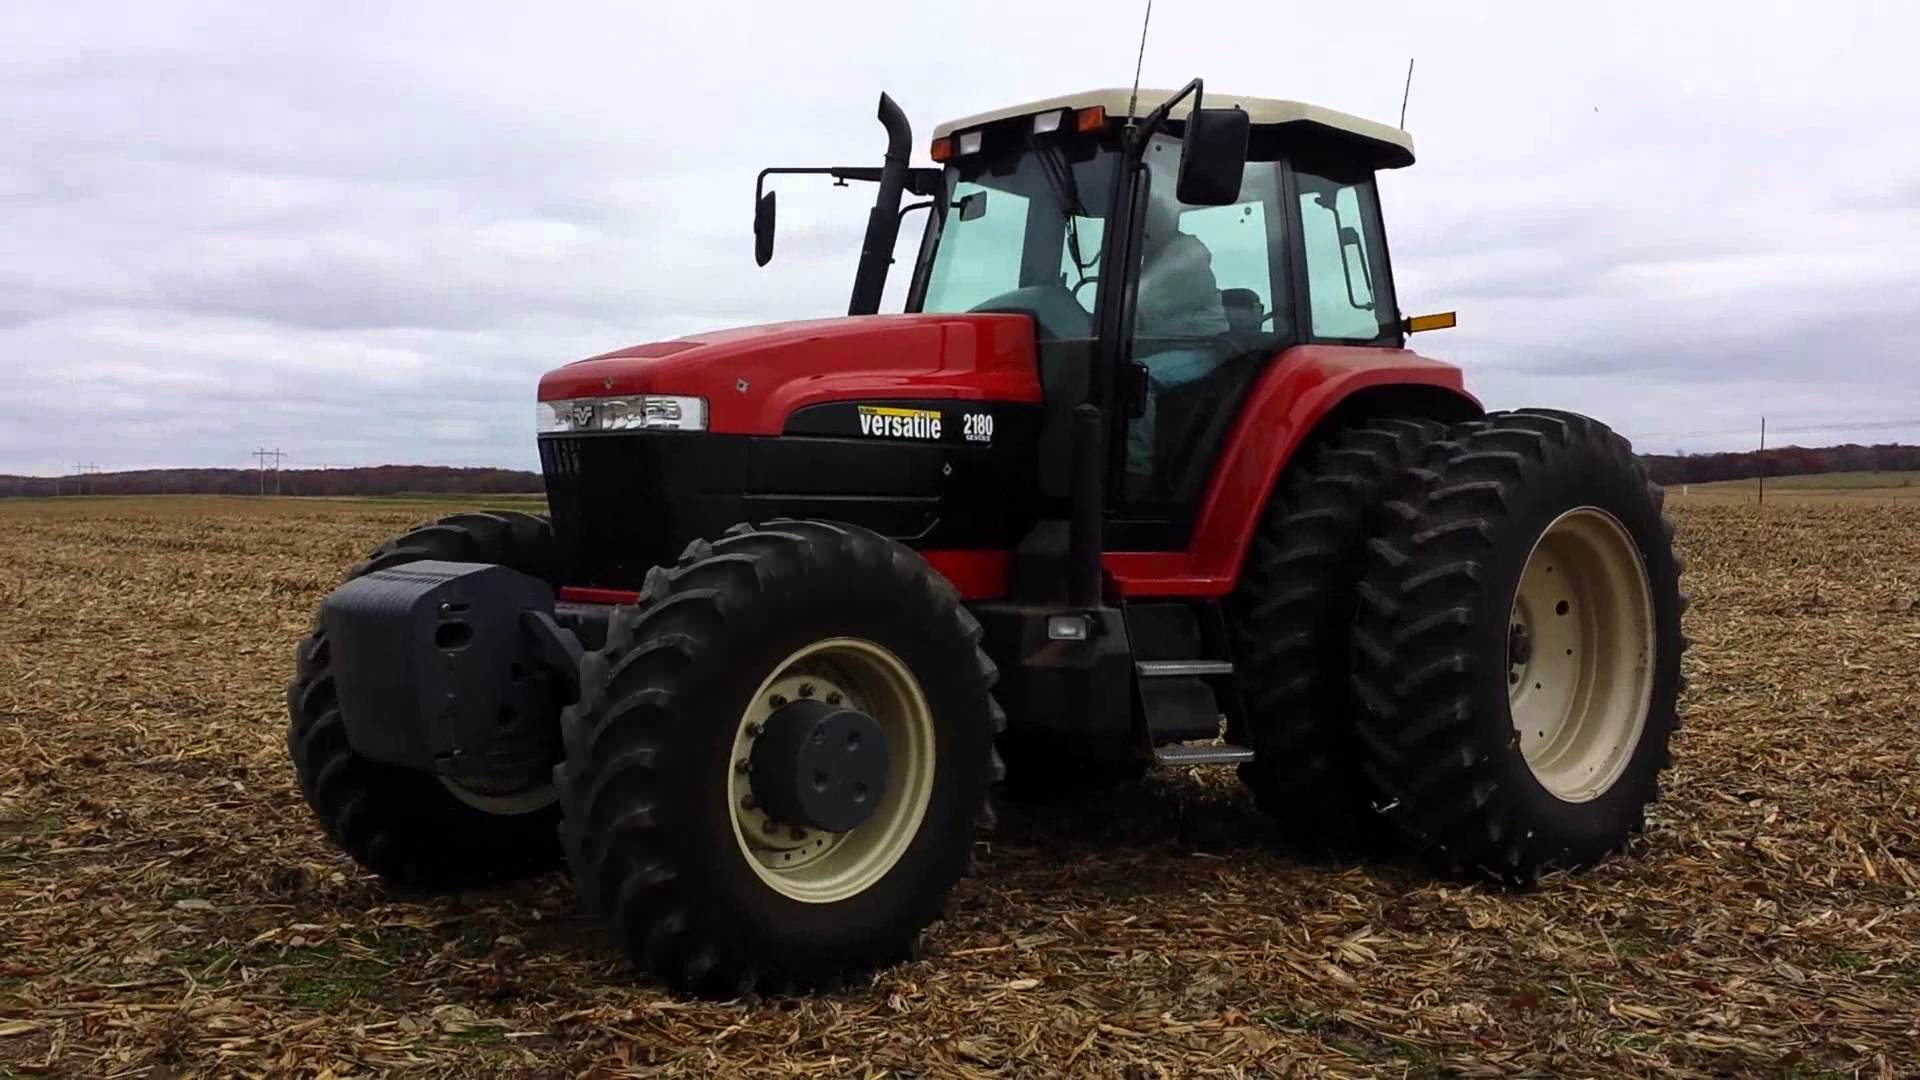 2002 Buhler Versatile 2180 Genesis Tractor Sells Dec 3 2014 www ...